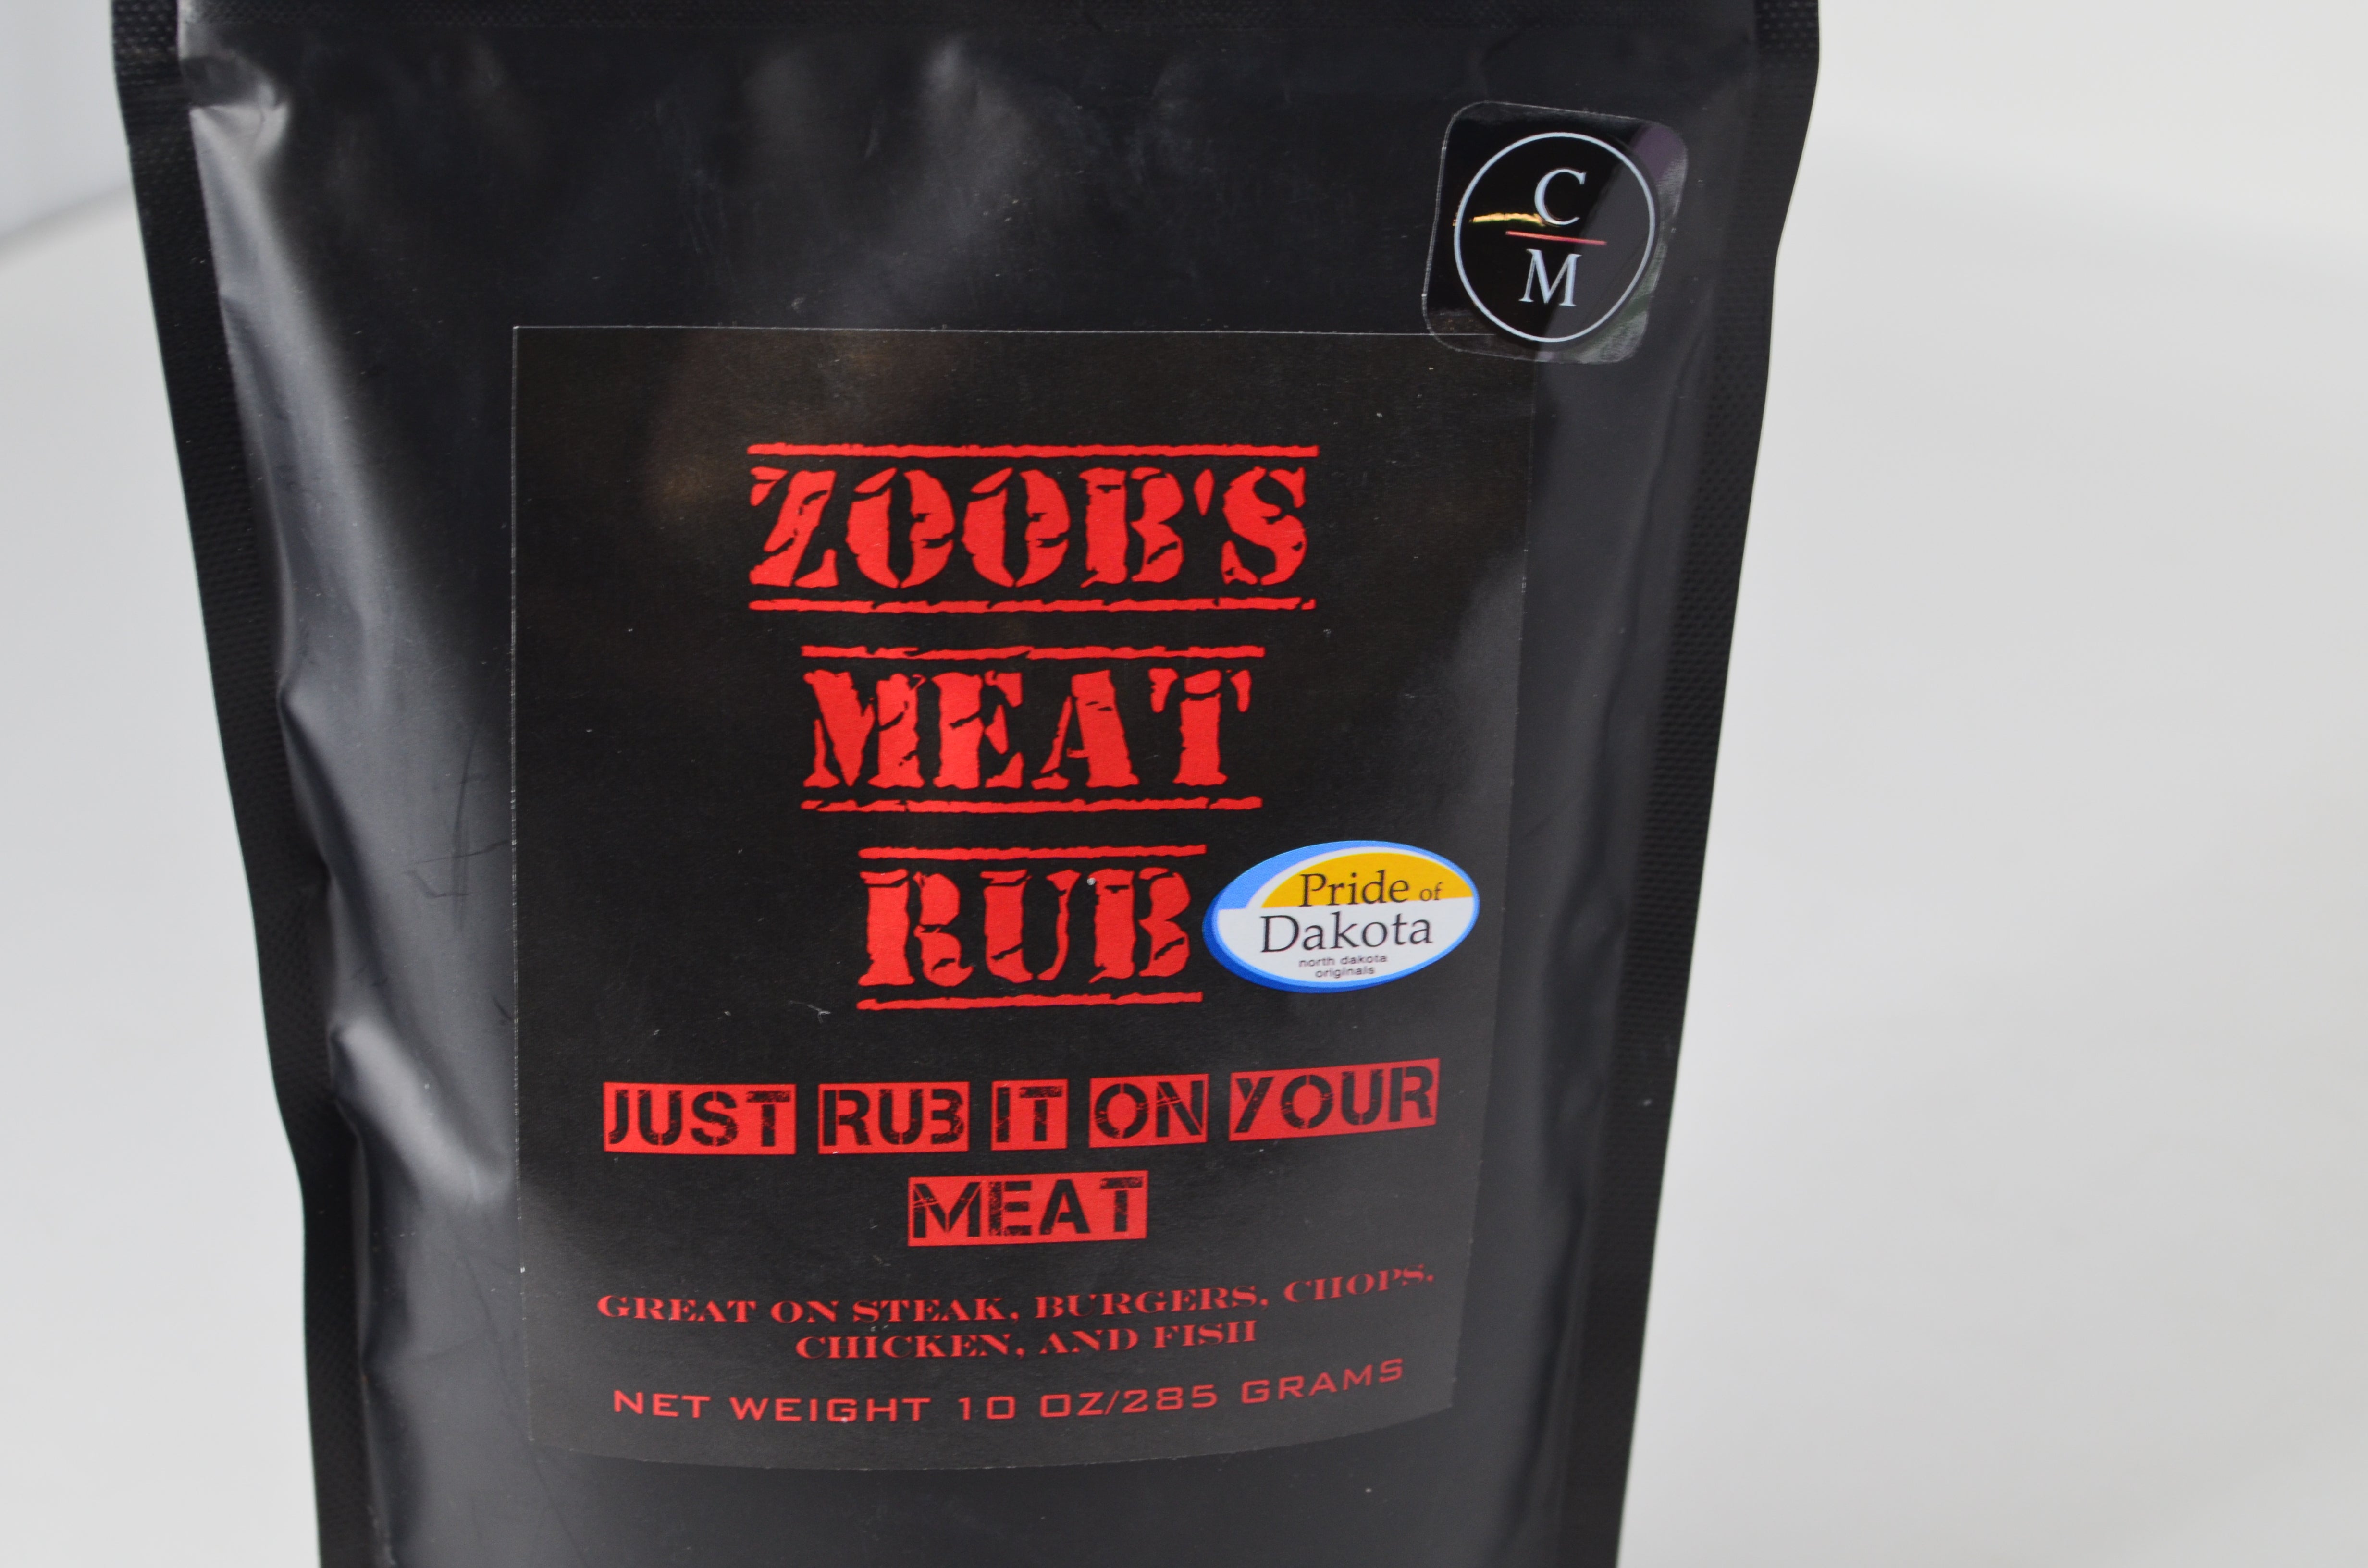 Zoob's Meat Rub